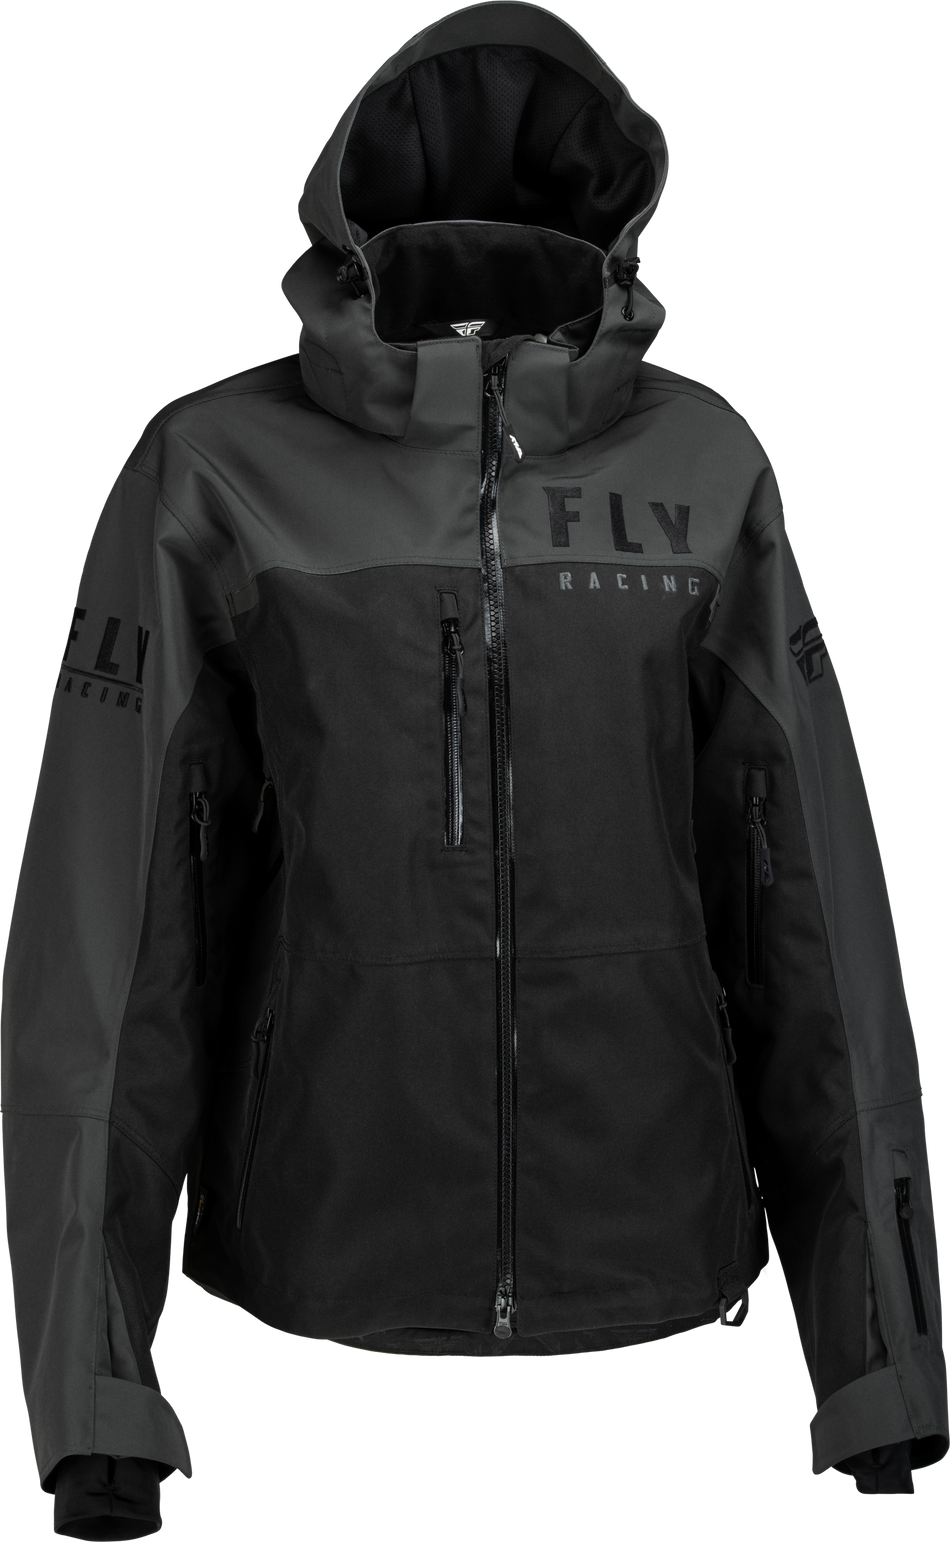 FLY RACING Women's Carbon Jacket Black/Grey Sm 470-4500S